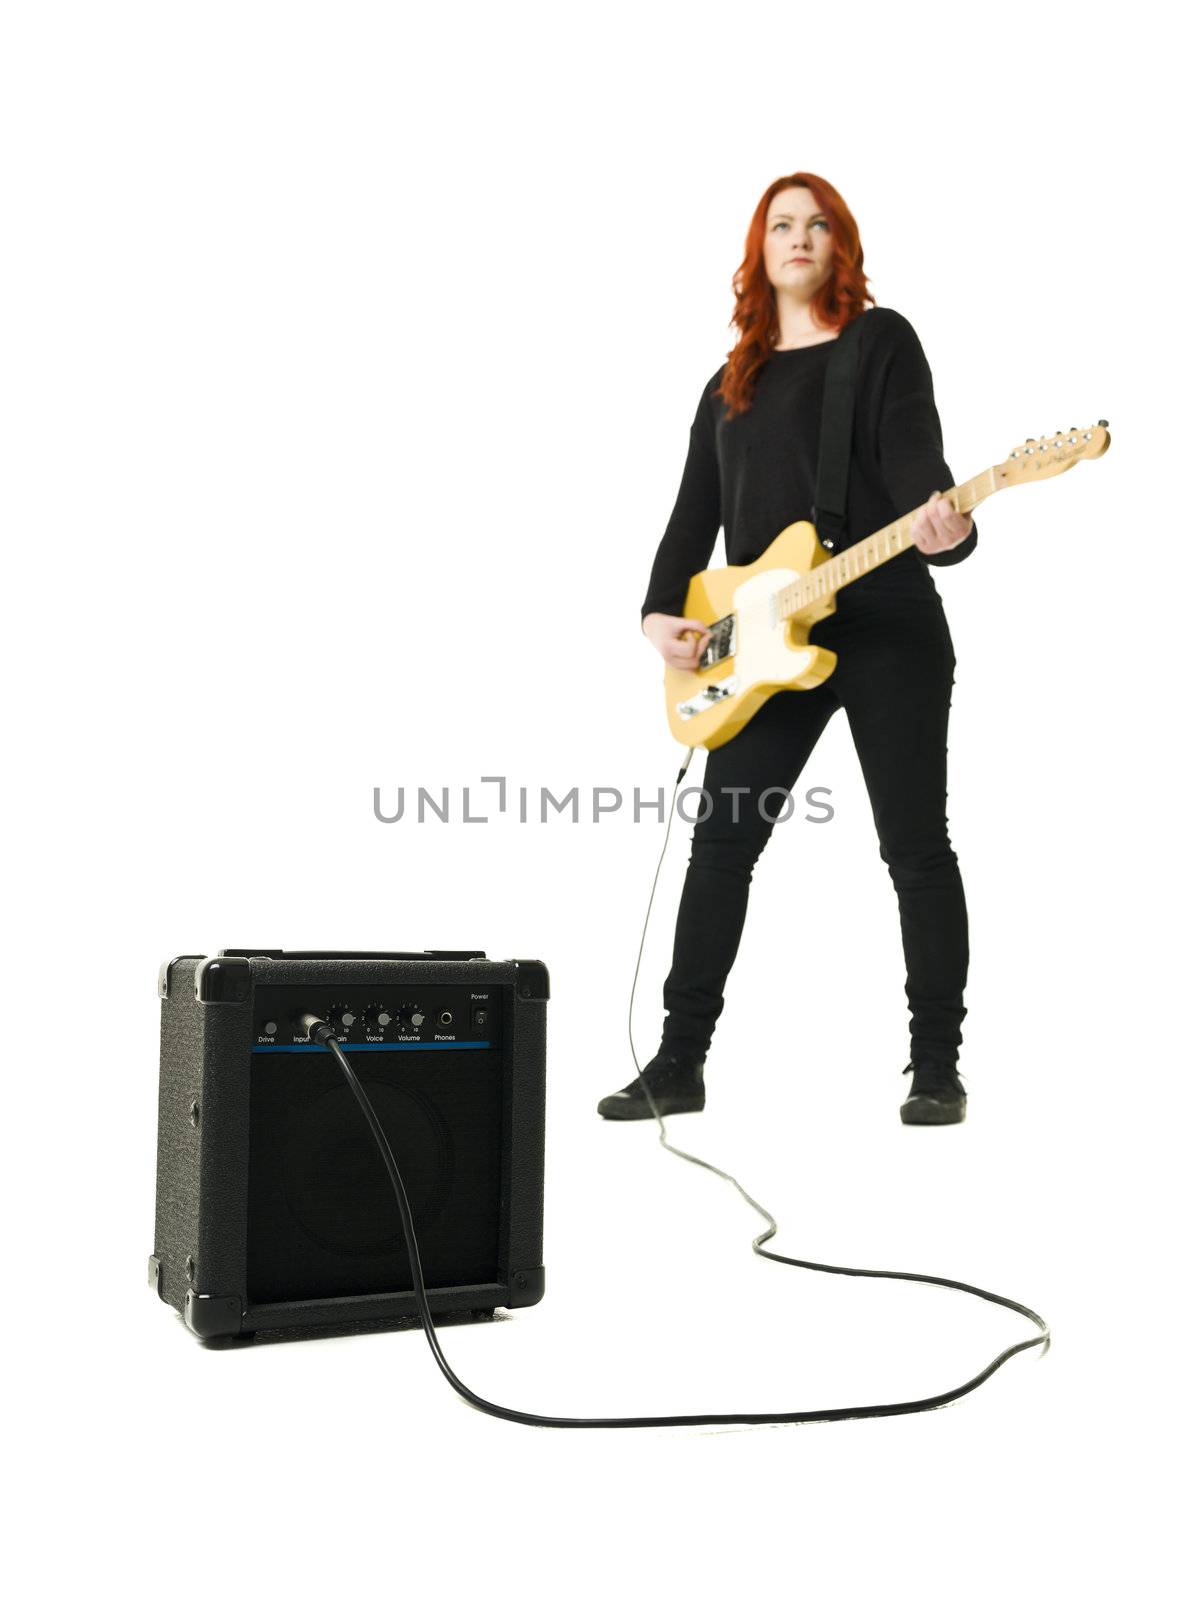 Female Guitar player by gemenacom